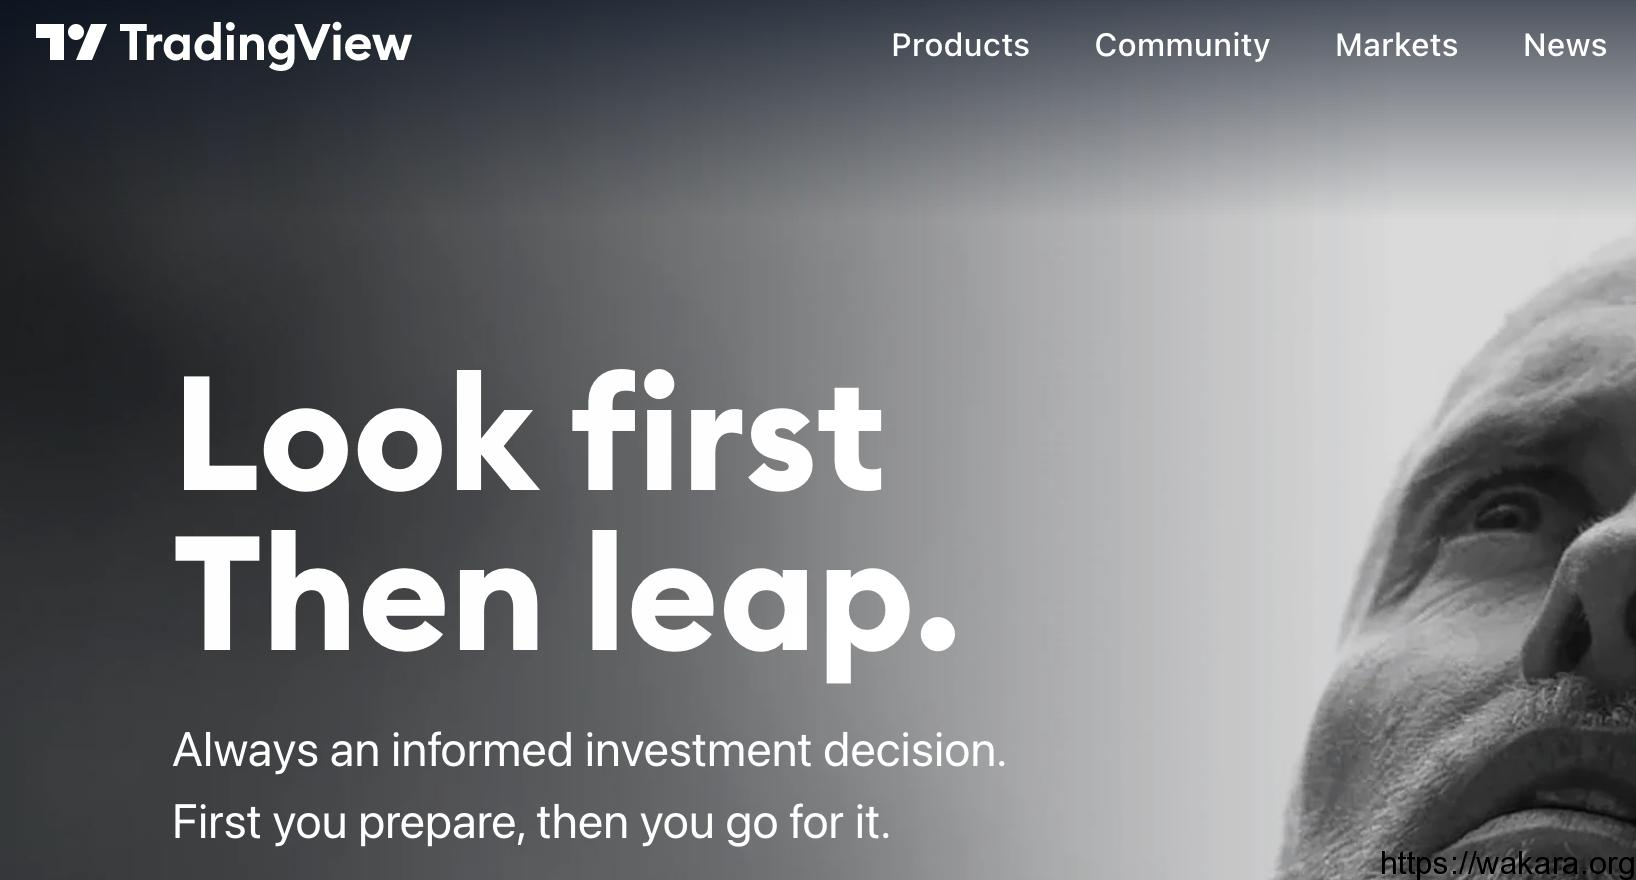 Tradingview Homepage